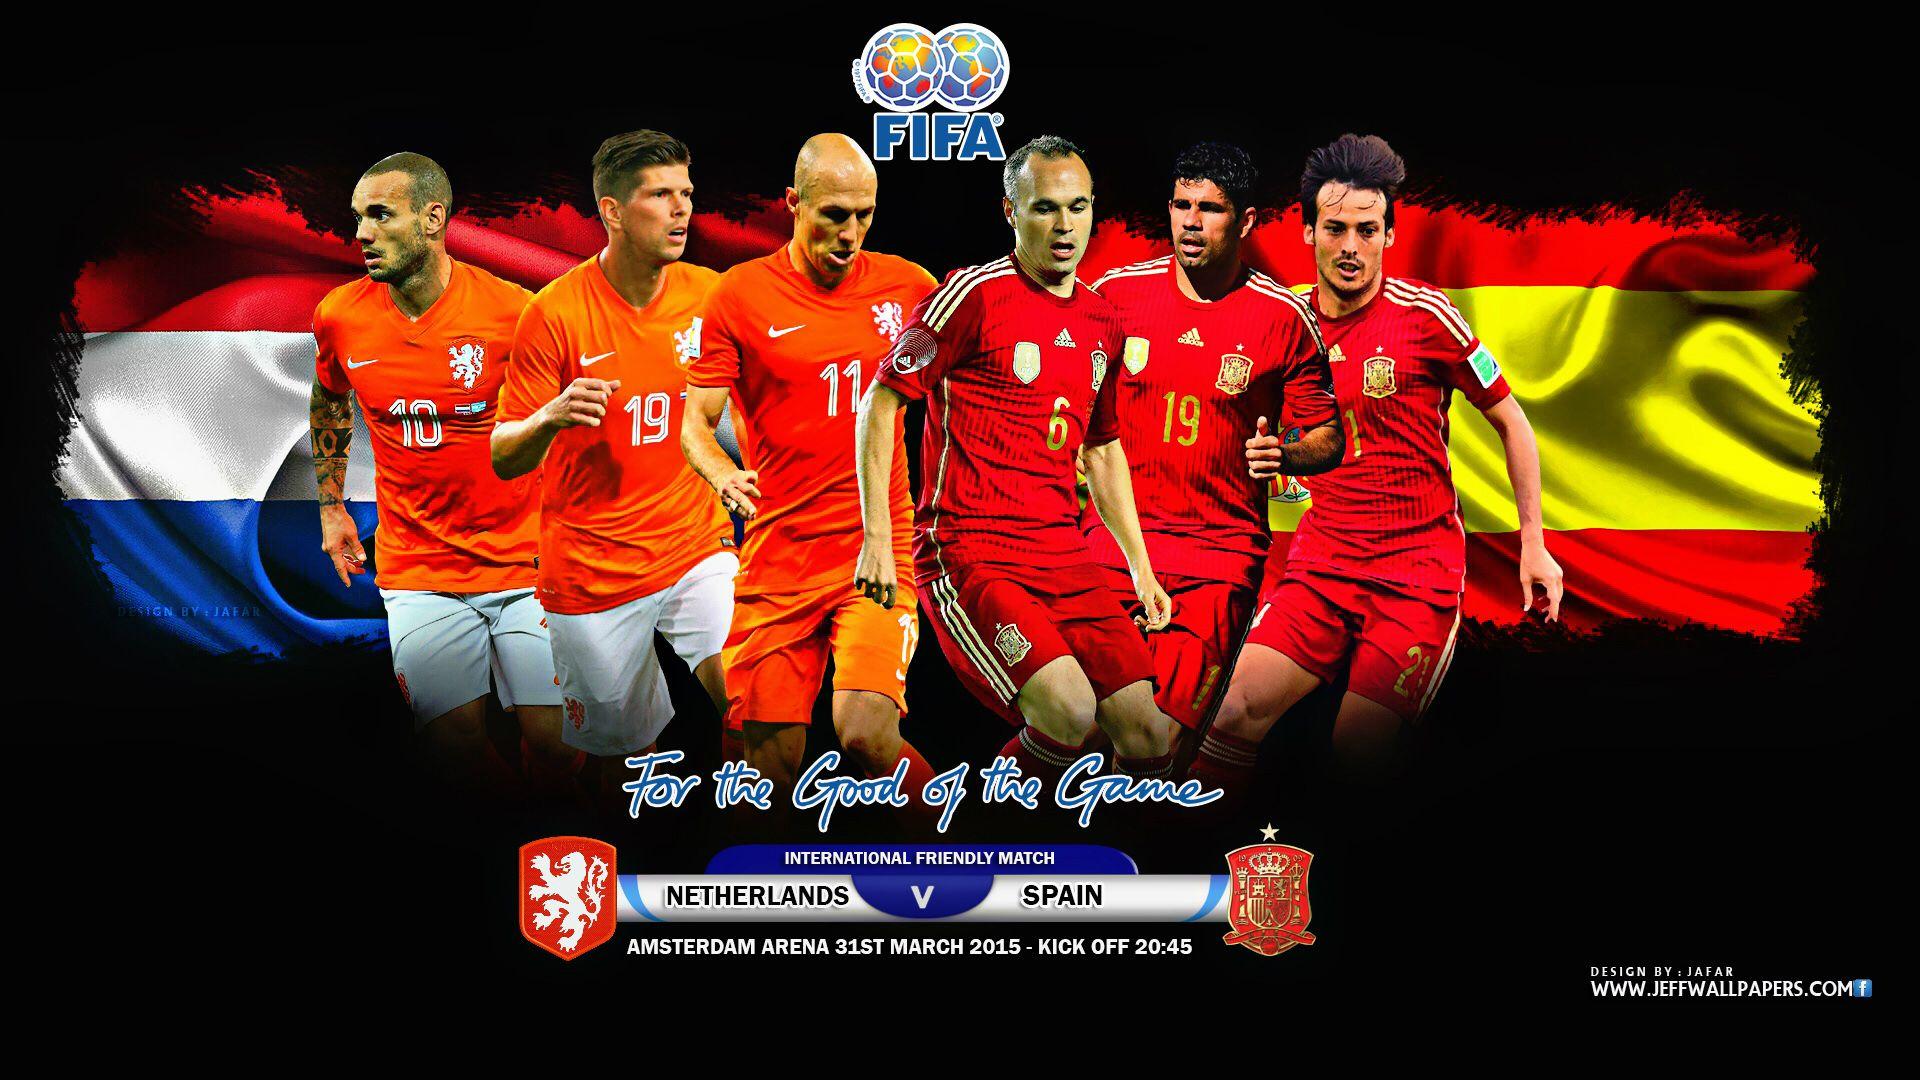 Netherlands Vs Spain 2015 International Friendly Football Match